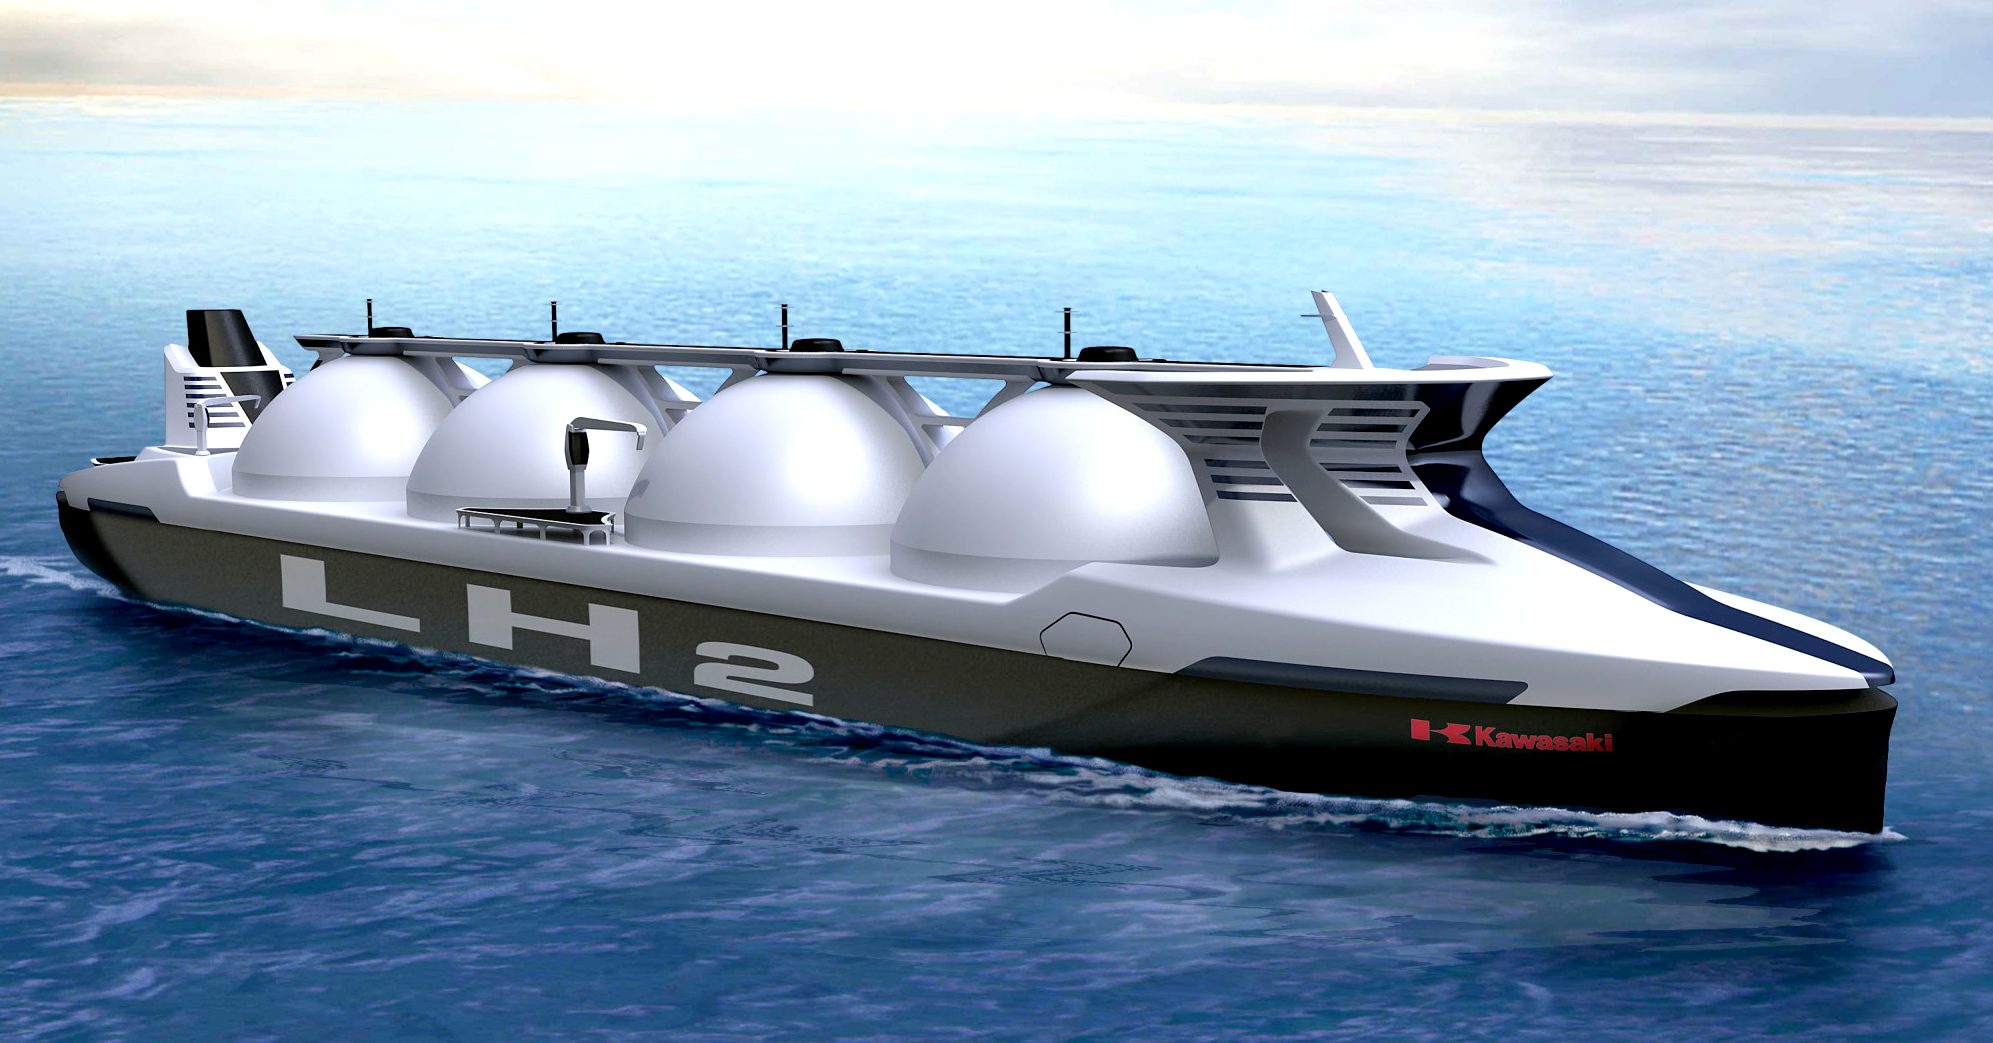 Kawasaki Heavy Industries, cryogenic liquid hydrogen fuel tanker for Japanese renewables